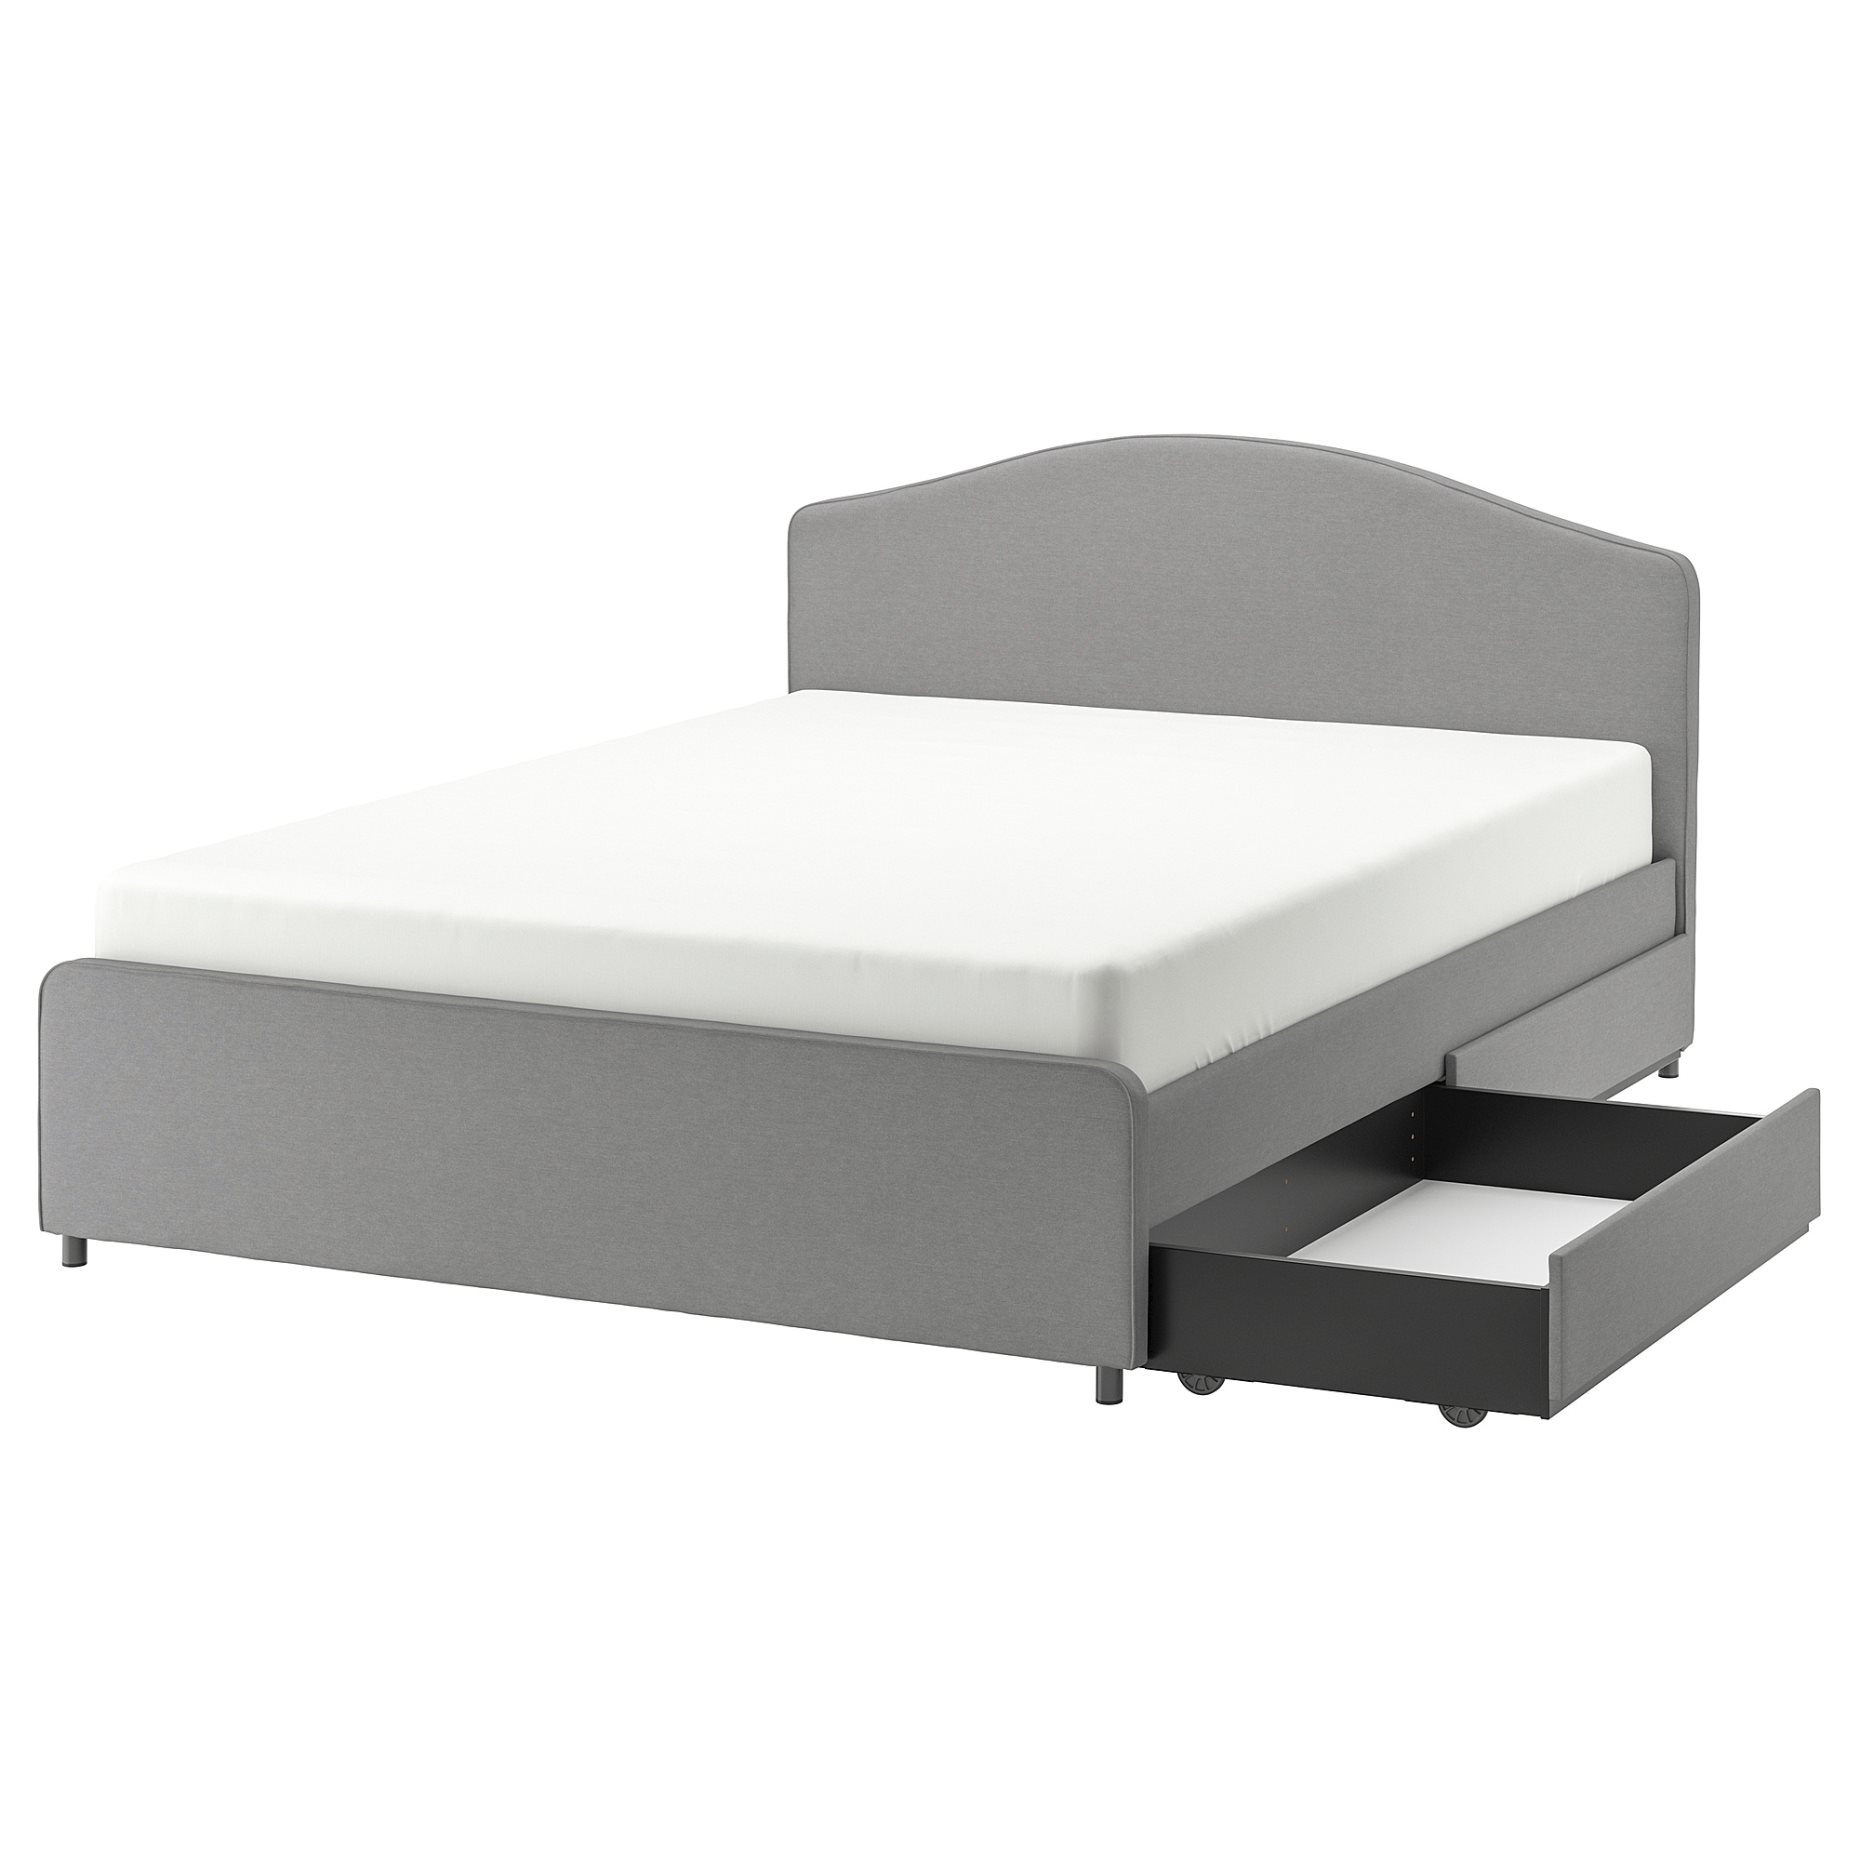 HAUGA, κρεβάτι με επένδυση/2 αποθηκευτικά κουτιά, 140X200 cm, 393.366.43